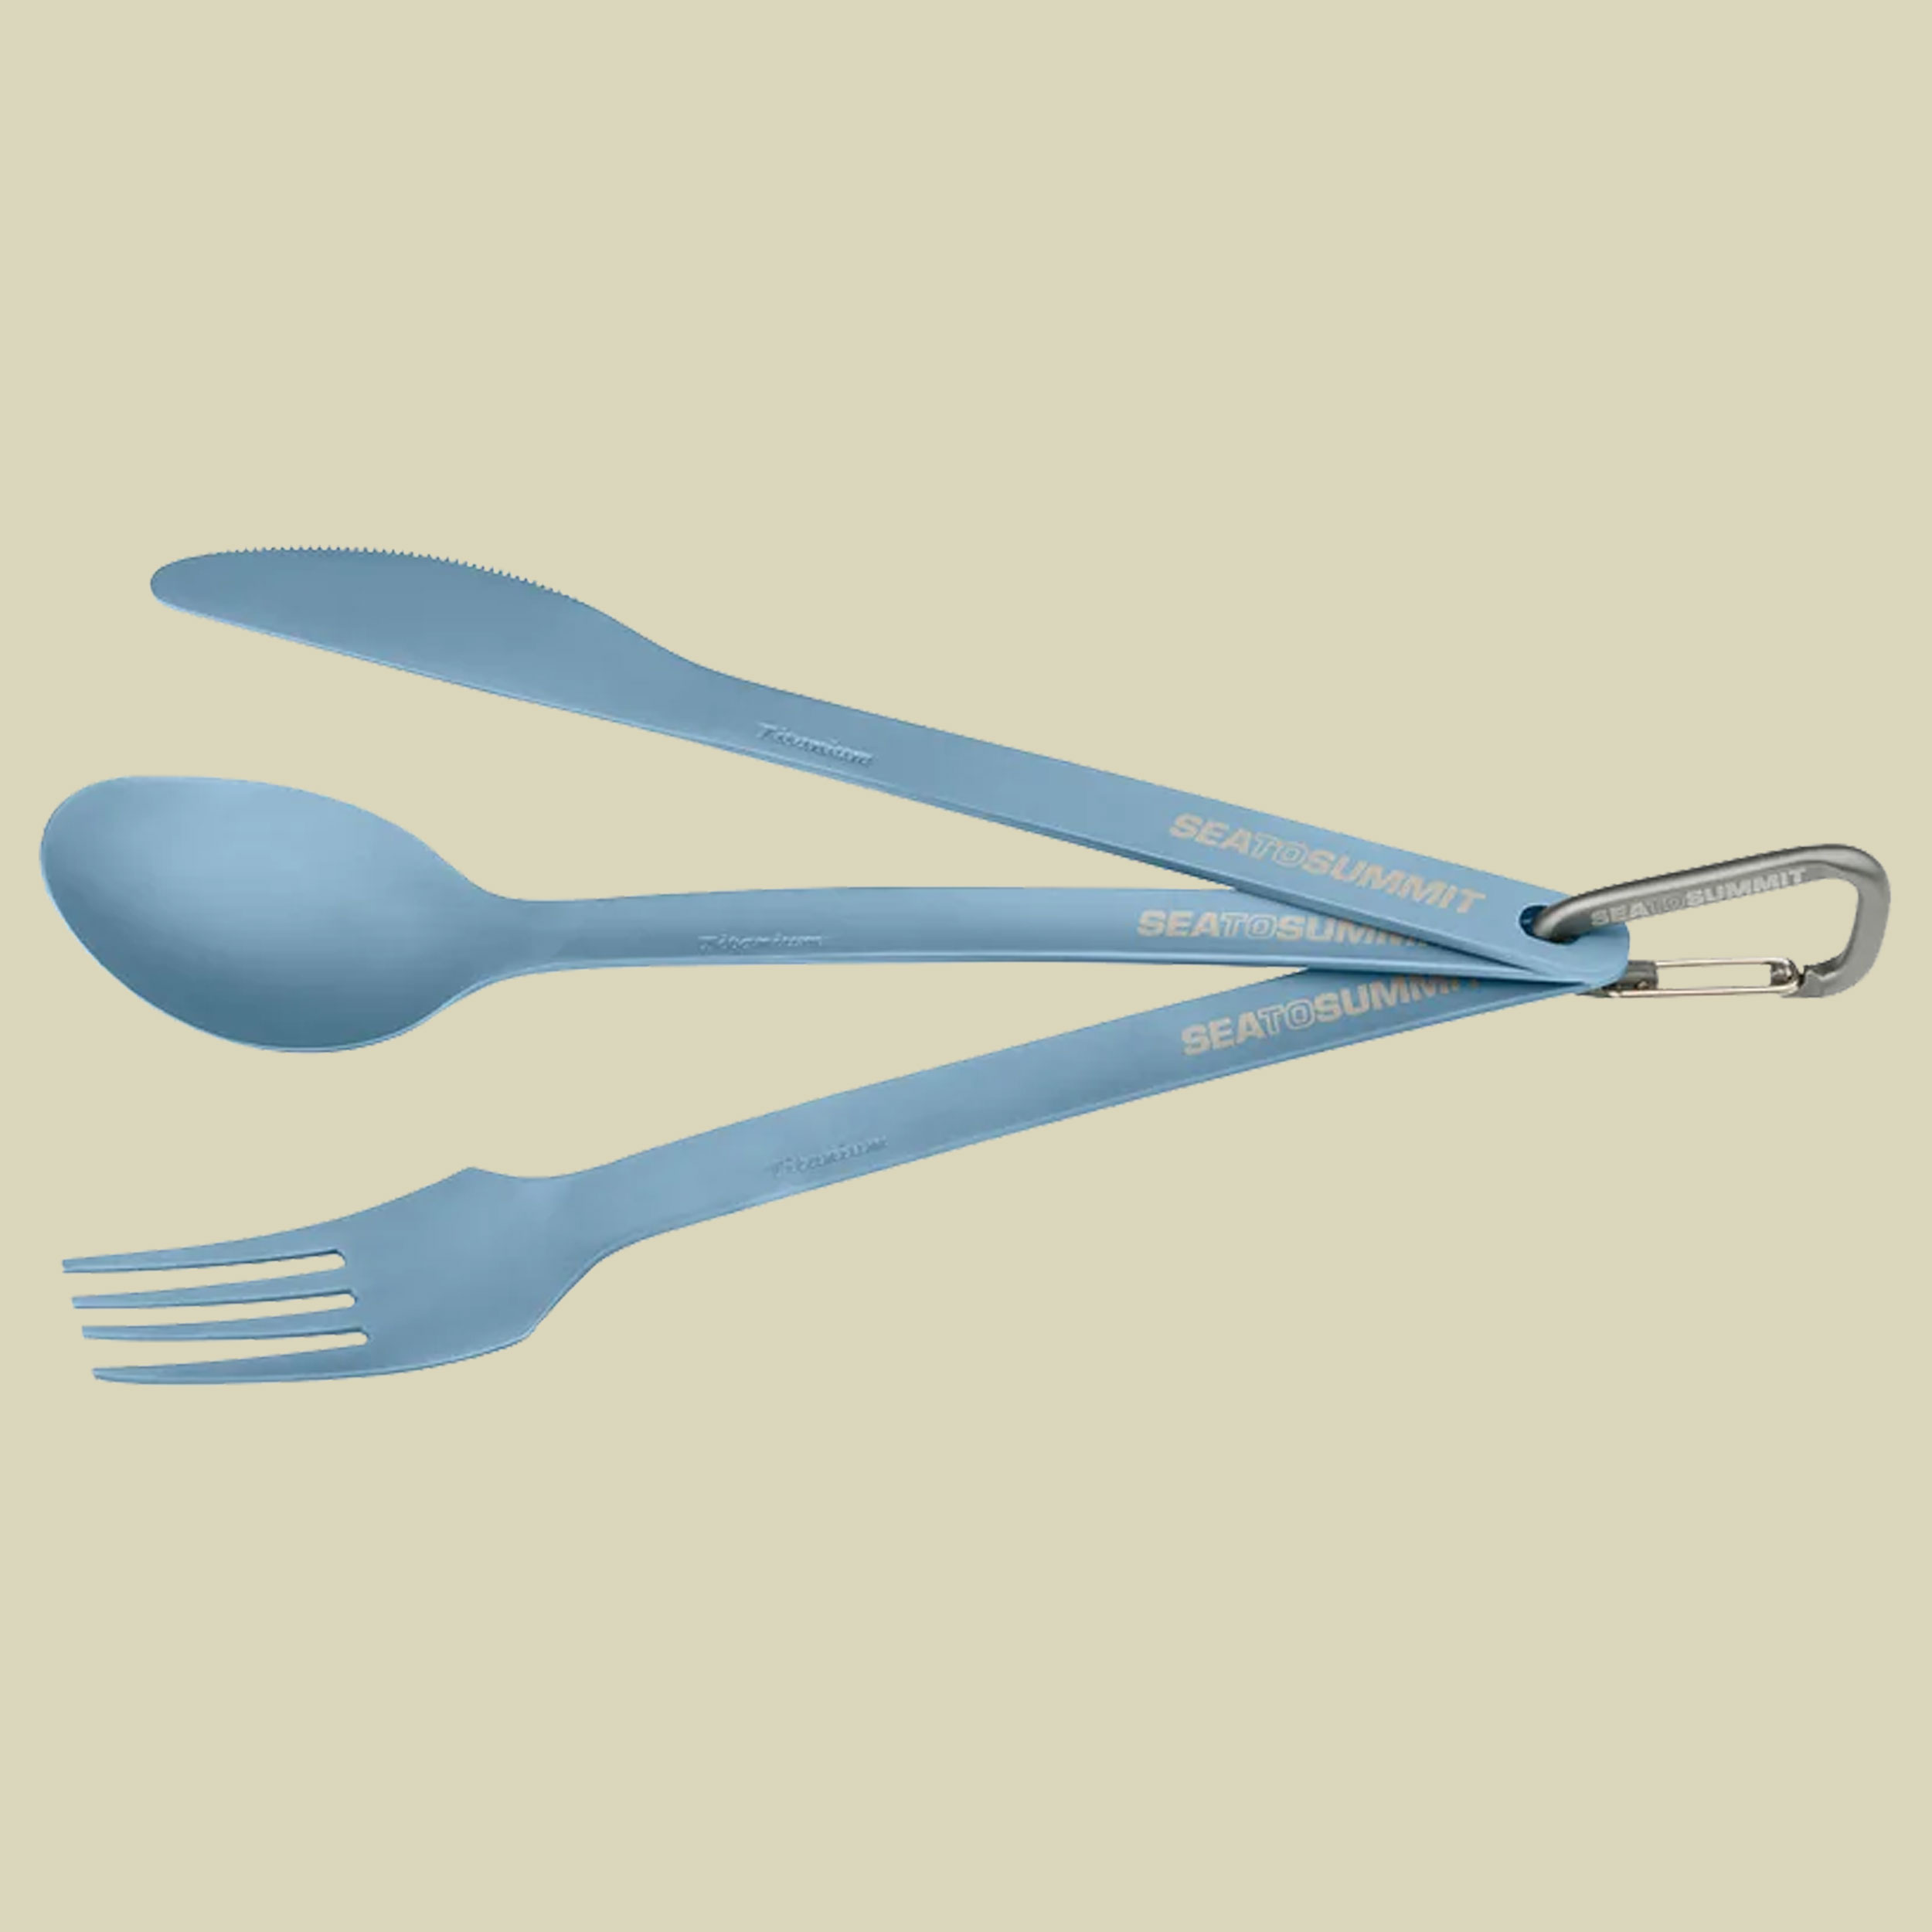 Titanium Cutlery Set (3-teilig) Gabel, Löffel und Messer Farbe blue anodised